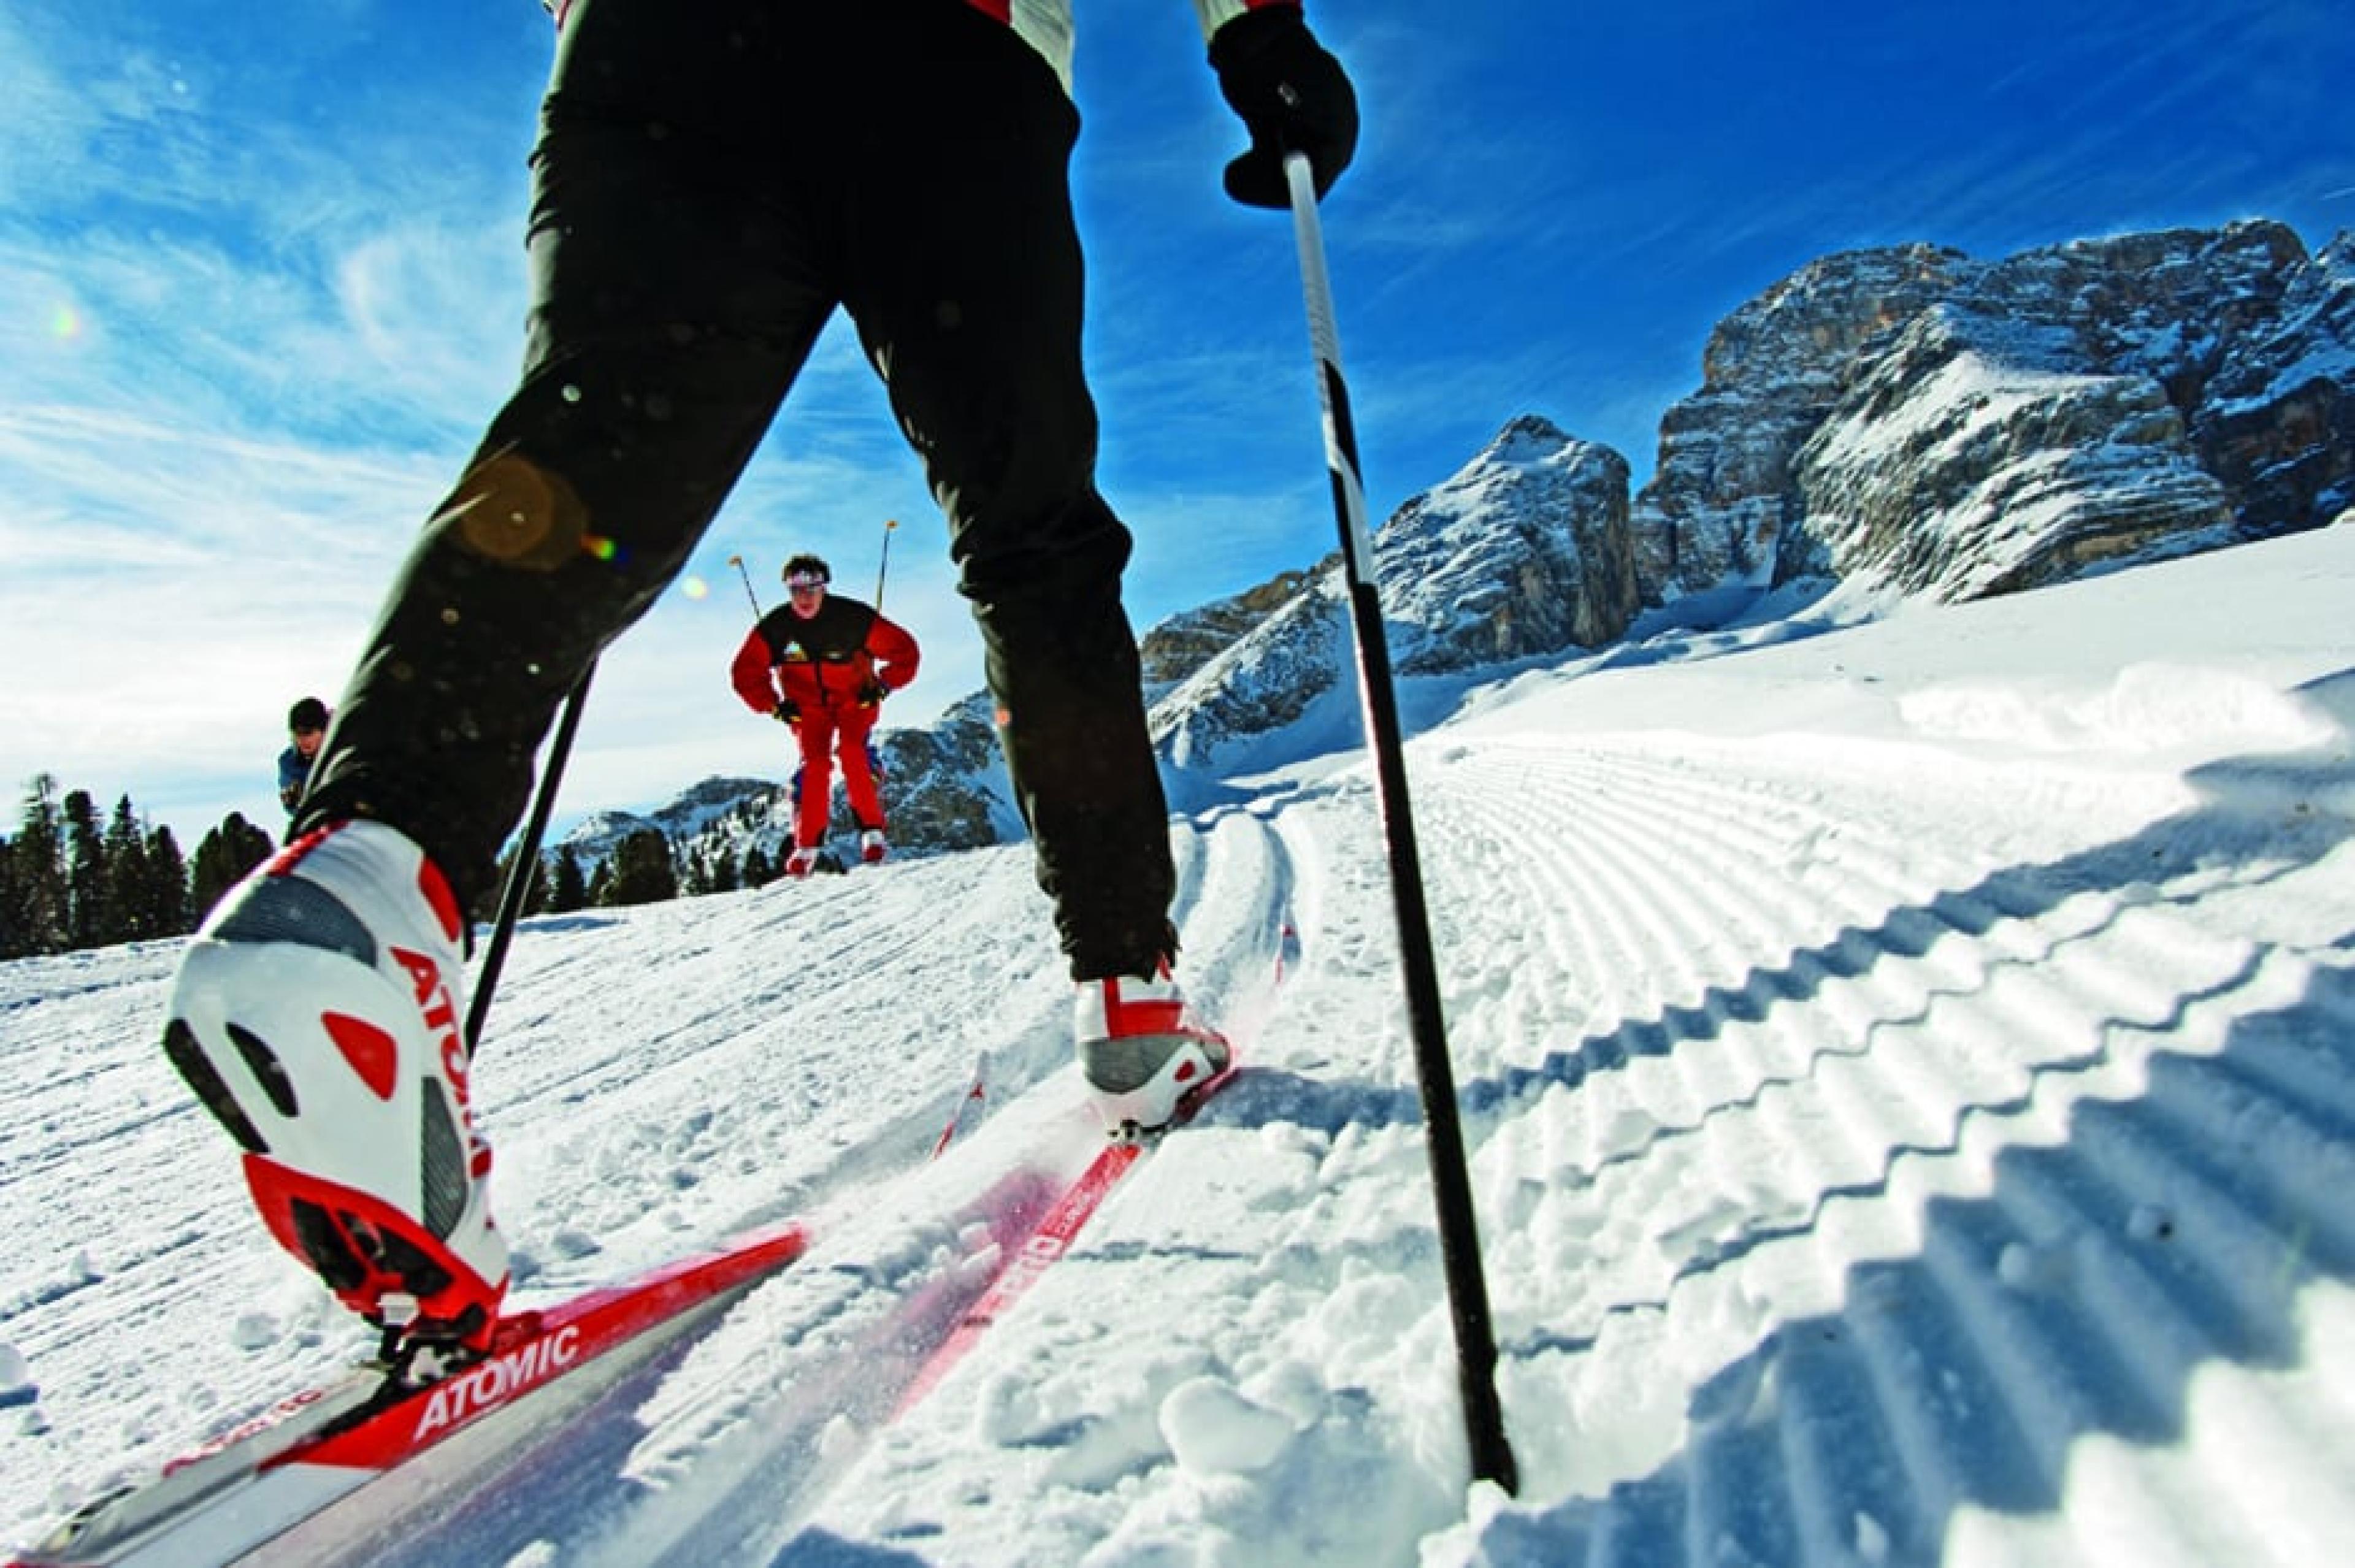 scattiong - Cross Country Skiing,Dolomites, Italy - Courtesy Zardini Stefano